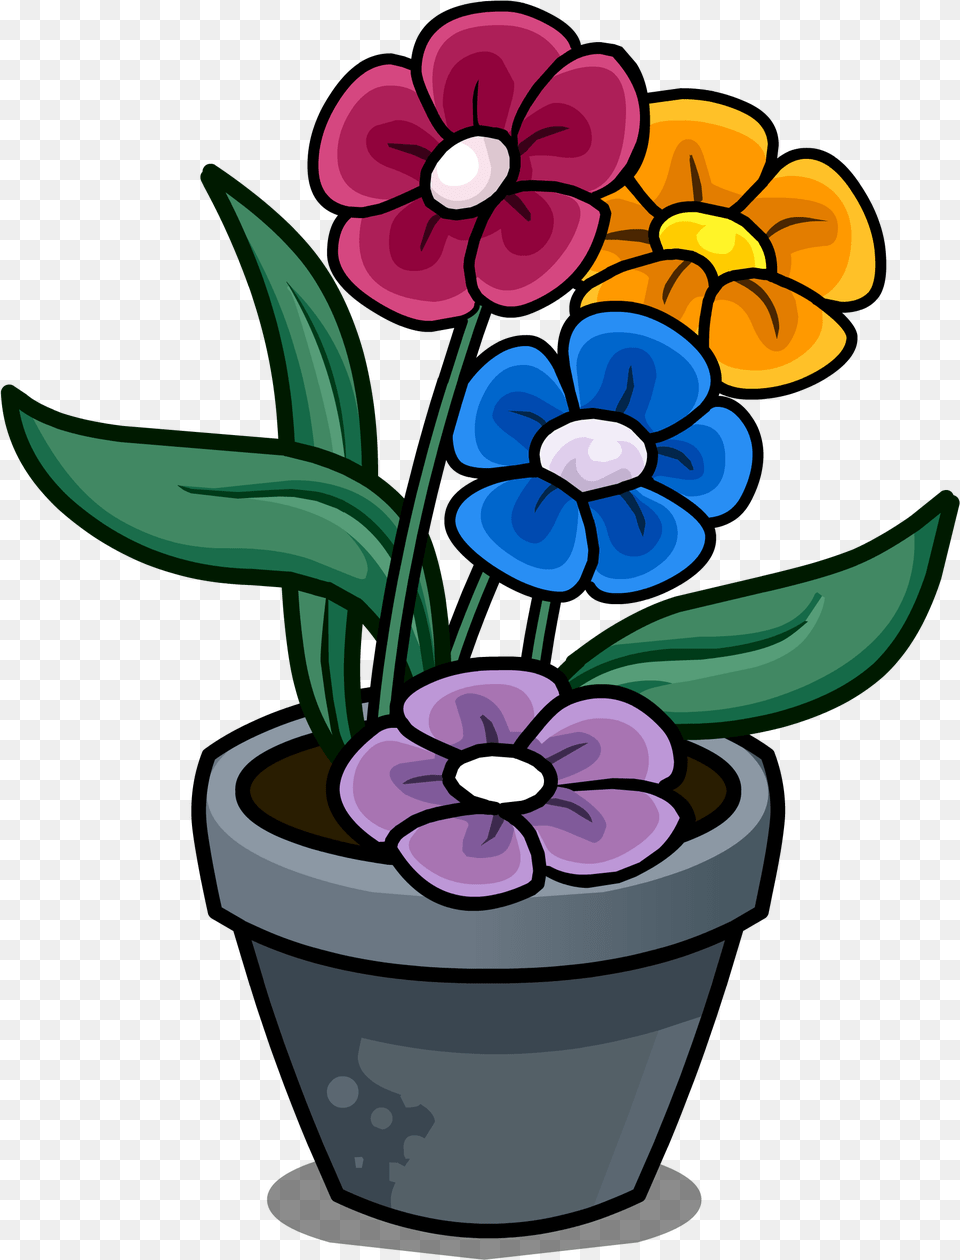 Library Of Flower Pot Cartoon Image Transparent Download Flower Pot Pencil Drawing, Potted Plant, Plant, Flower Arrangement, Geranium Free Png